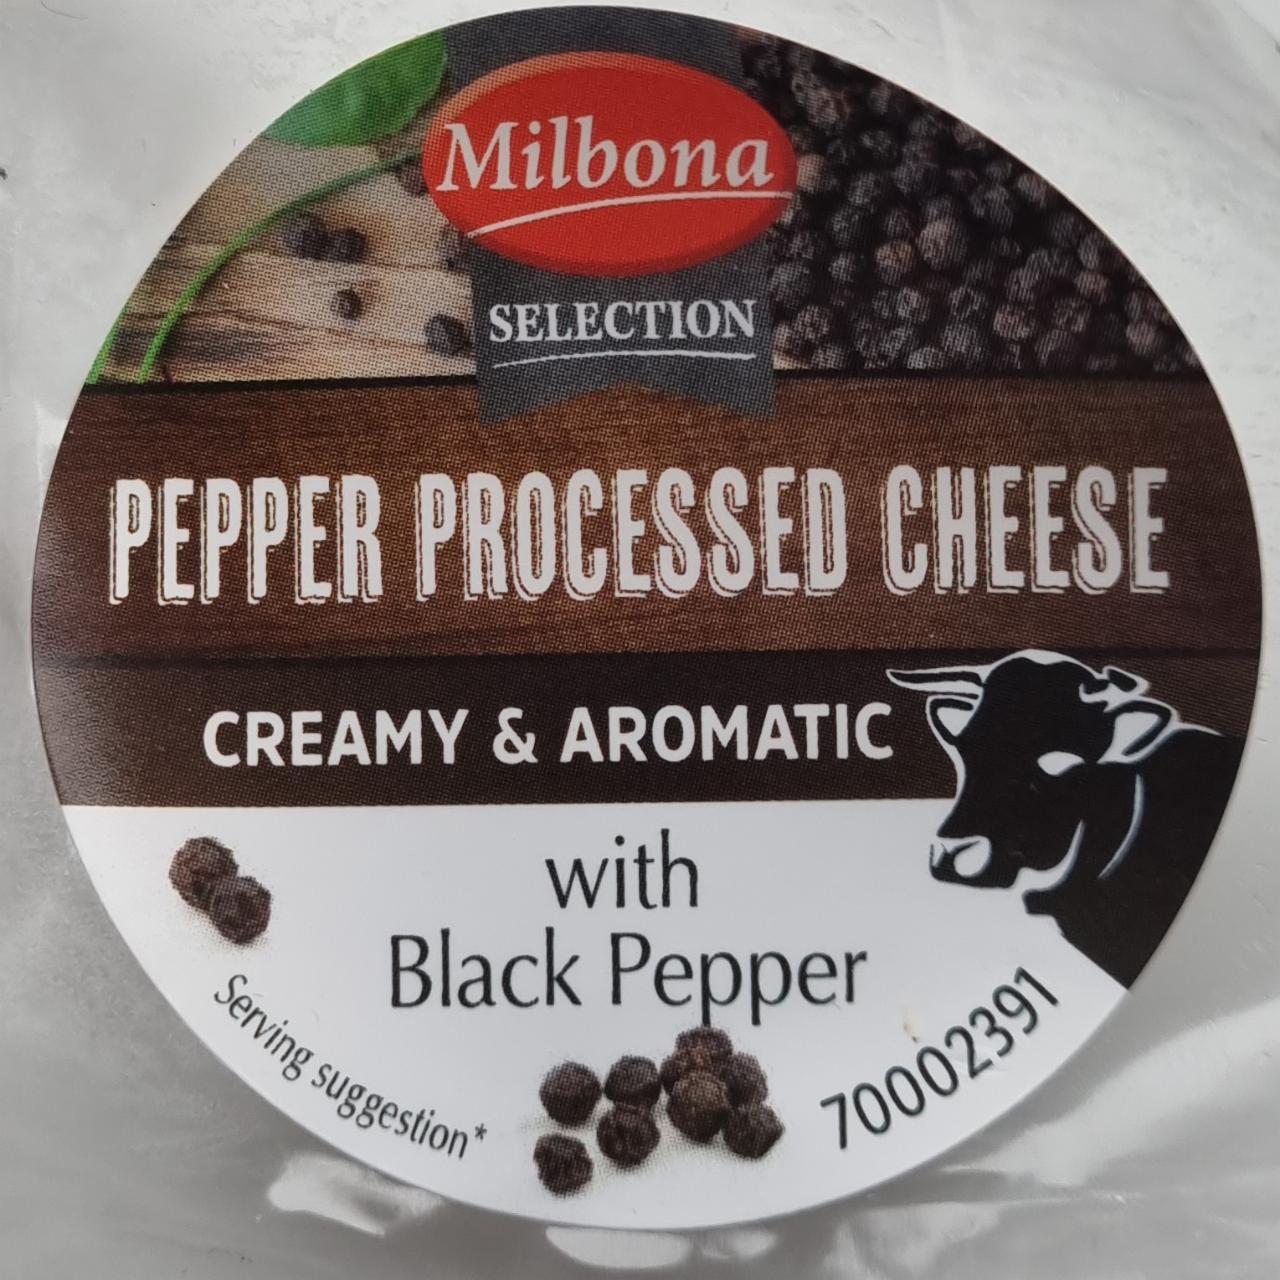 Fotografie - Pepper processed cheese Milbona